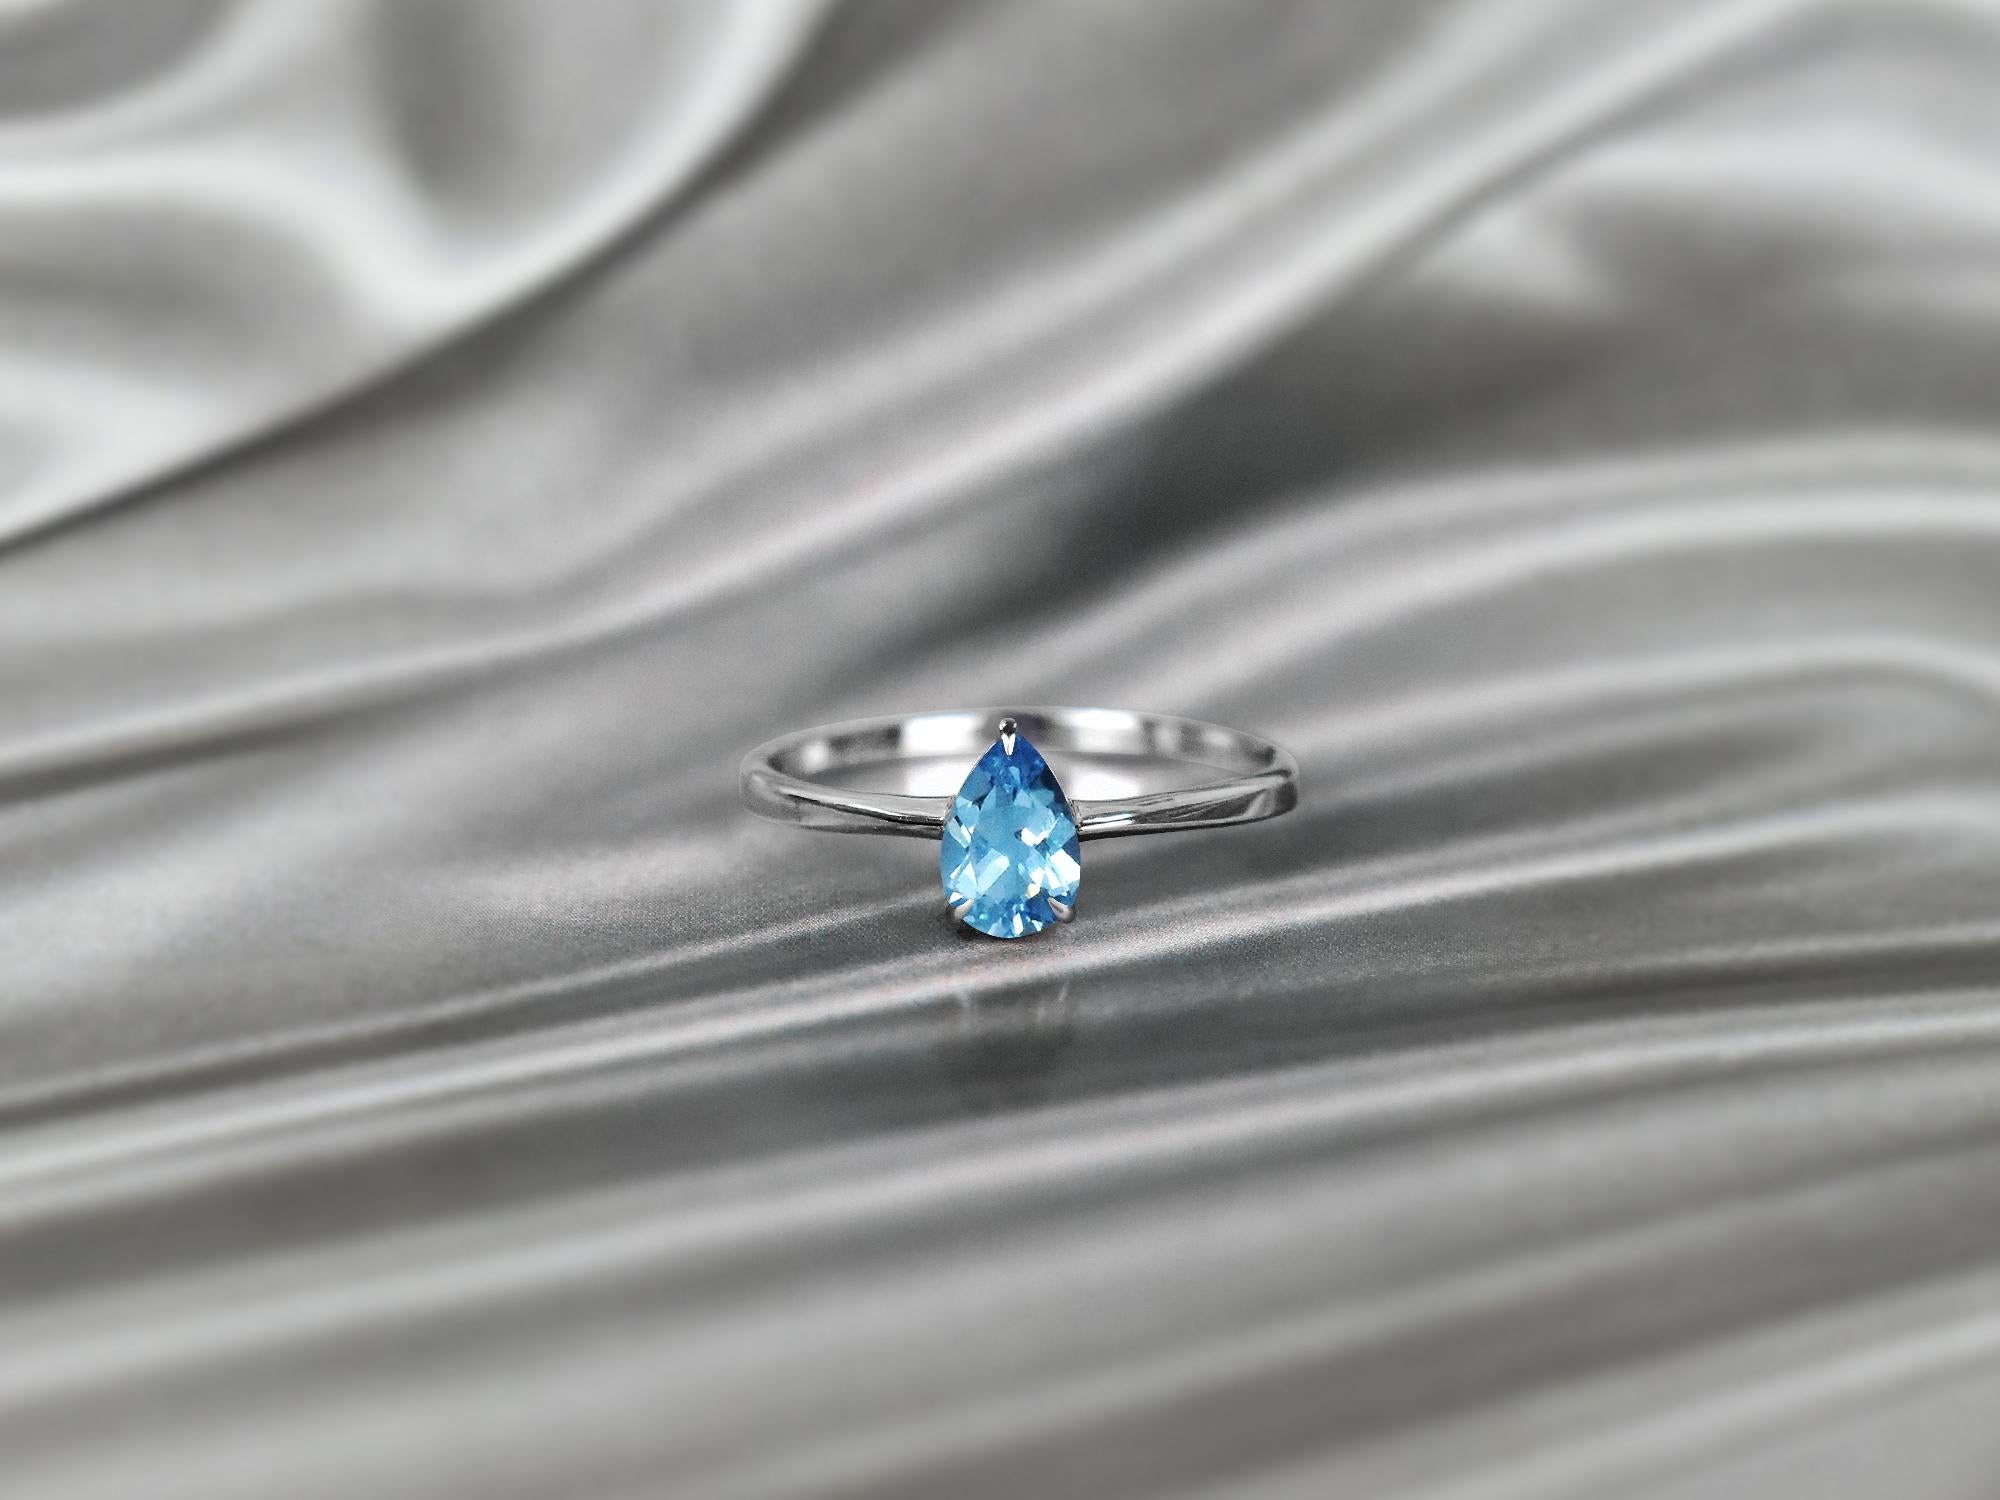 For Sale:  14k Gold Pear Gemstone 7x5 mm Pear Gemstone Ring Birthstone Ring Engagement Ring 8